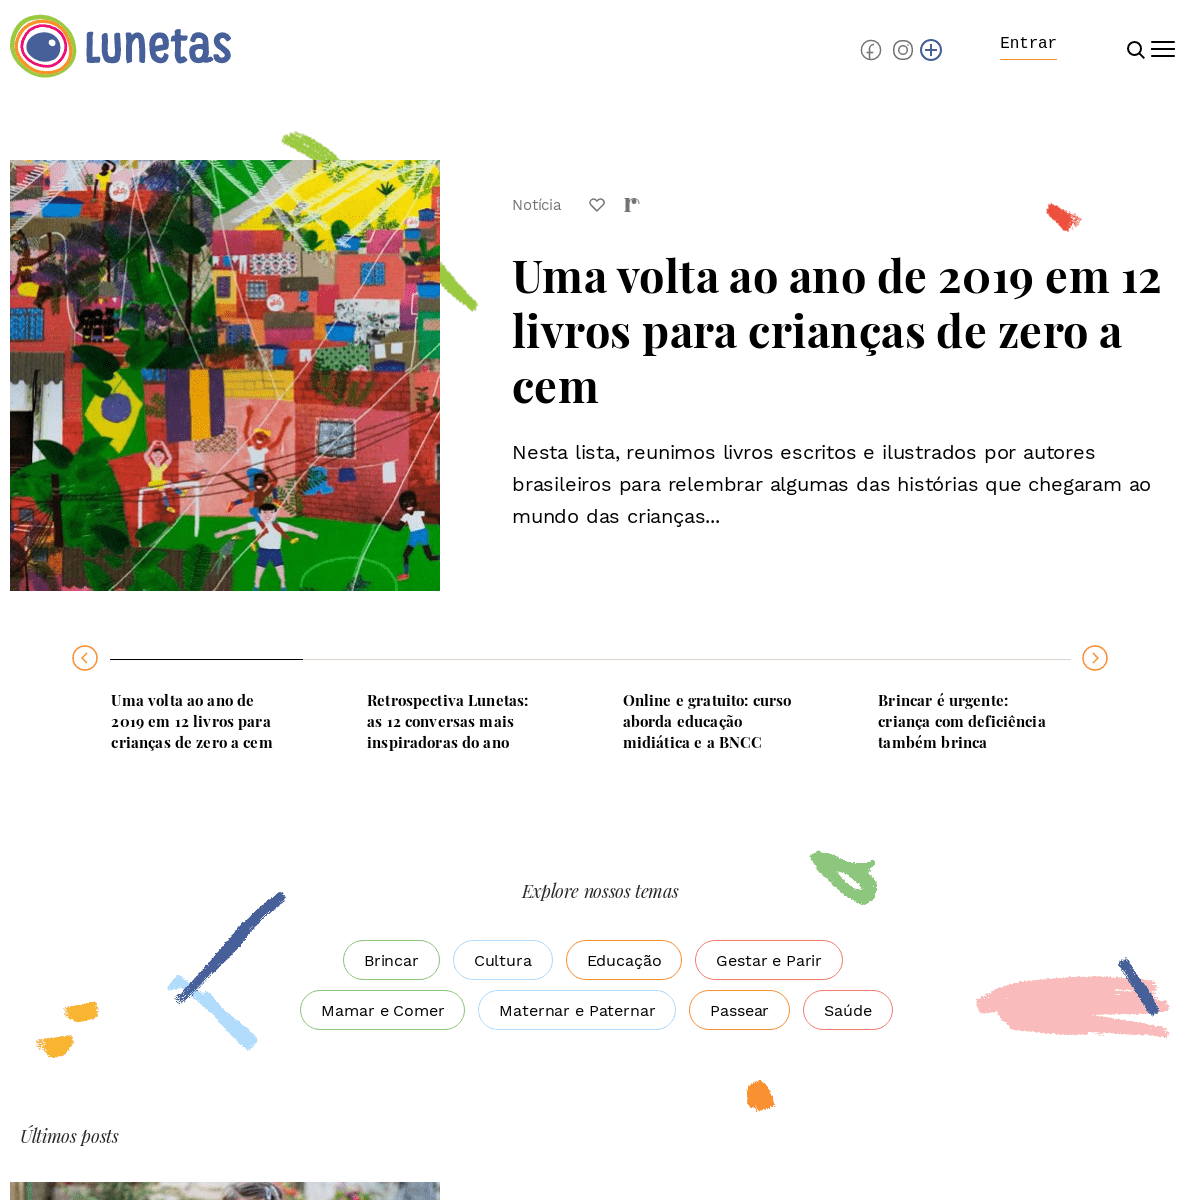 A complete backup of lunetas.com.br